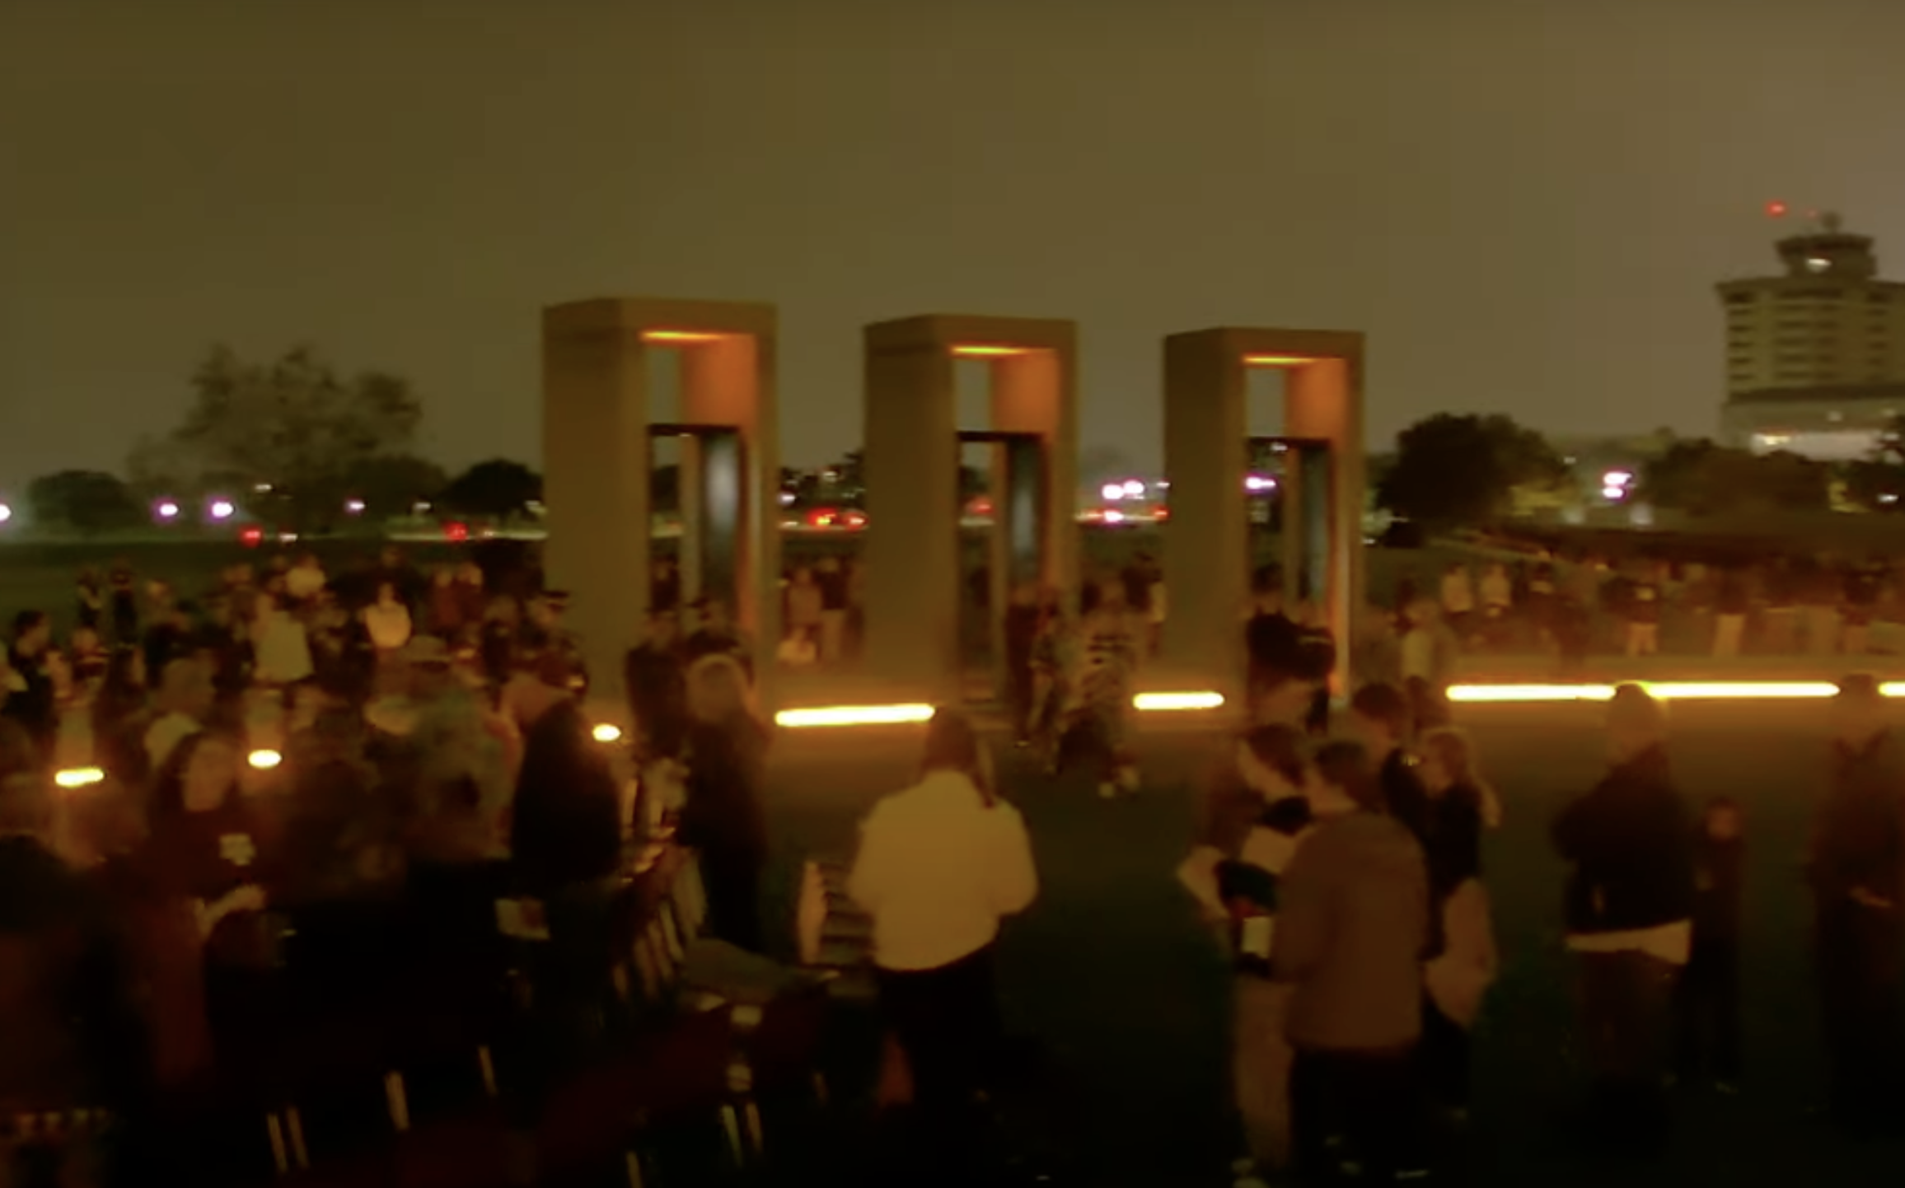 My reflection of Bonfire Memorial teaser image